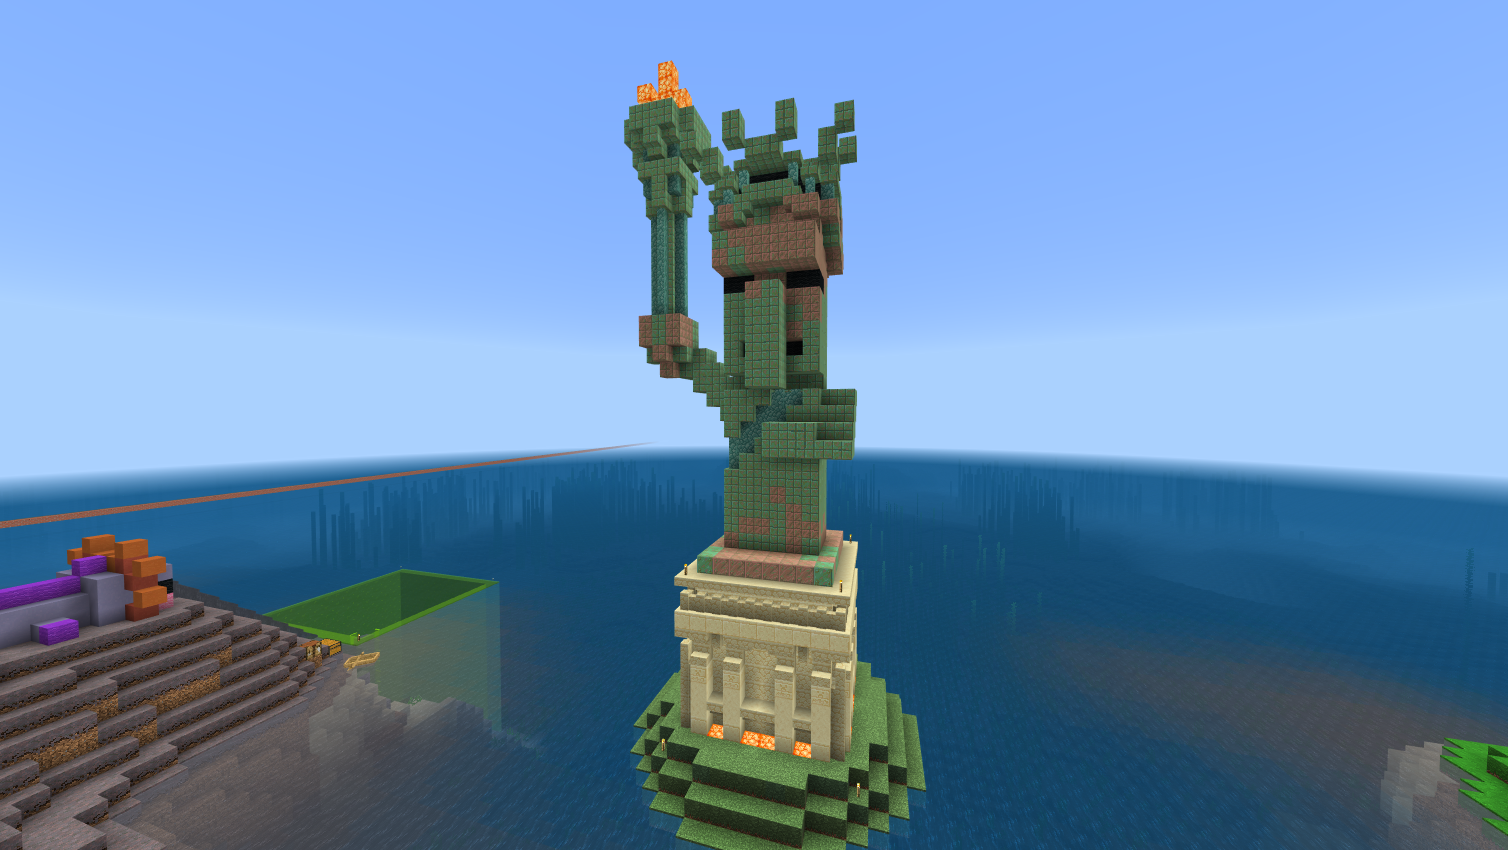 Nana's statue of liberty